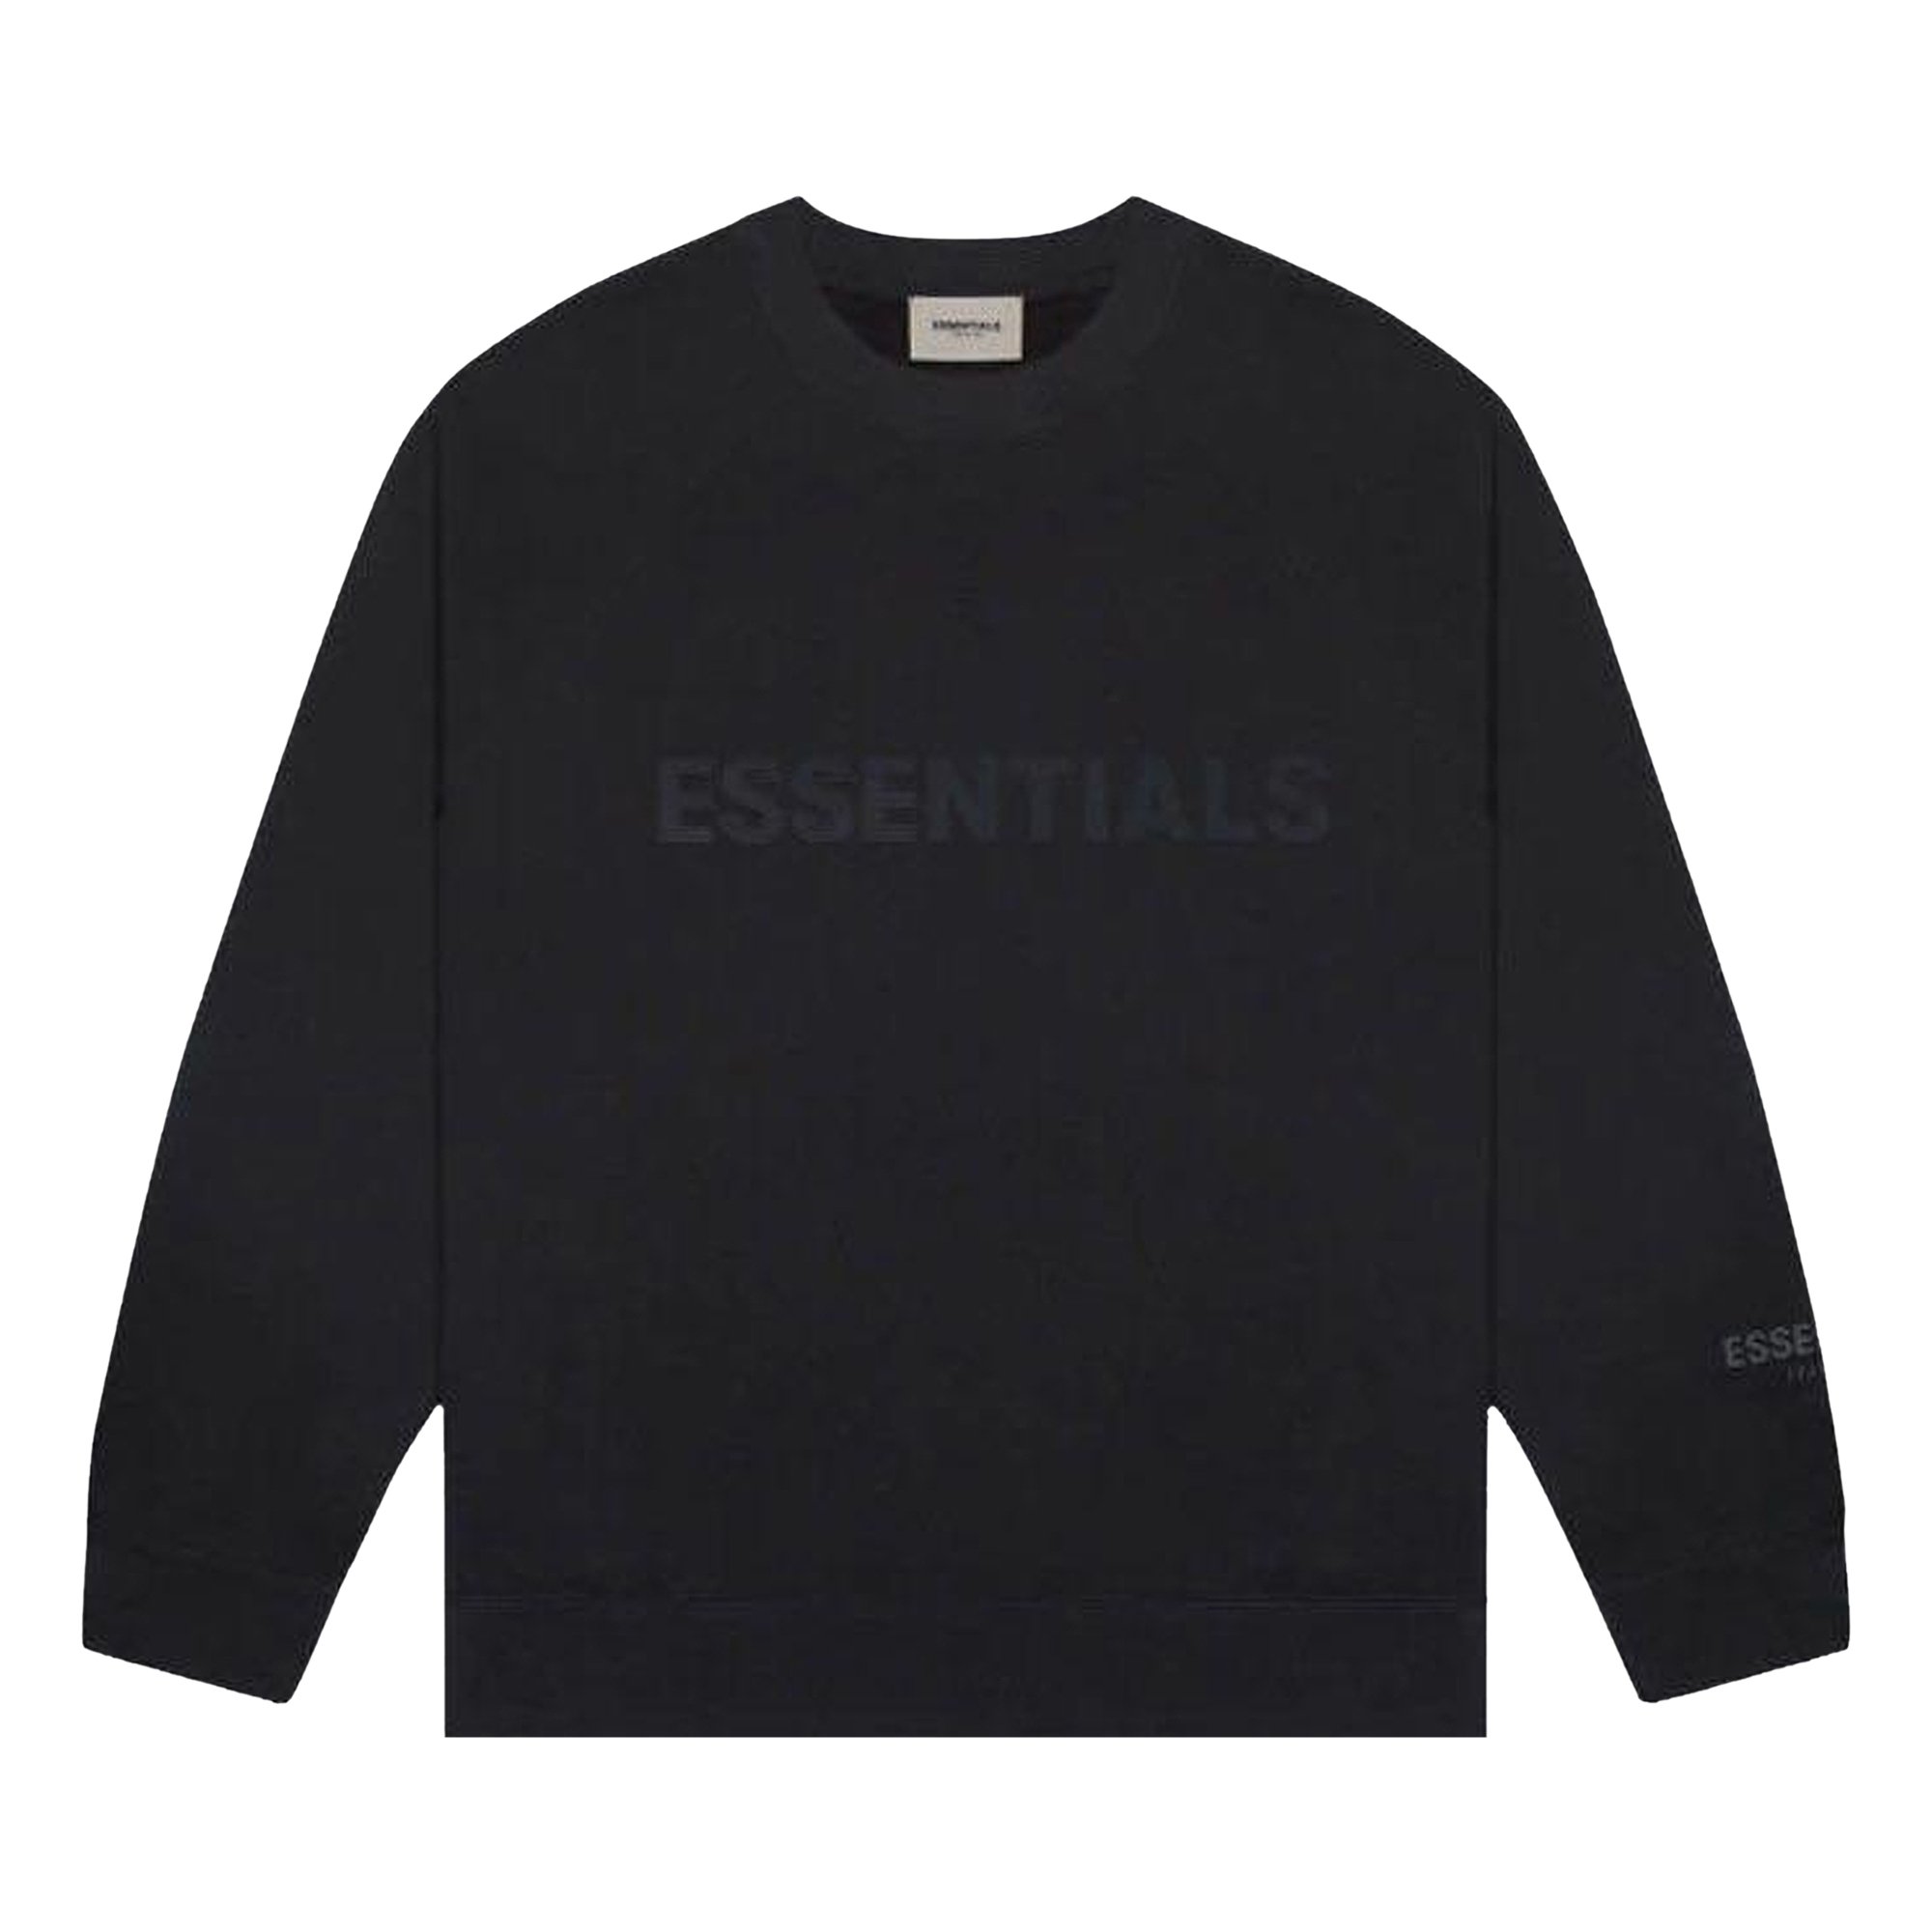 Buy Fear of God Essentials Crewneck Sweatshirt 'Black' - 0192 ...